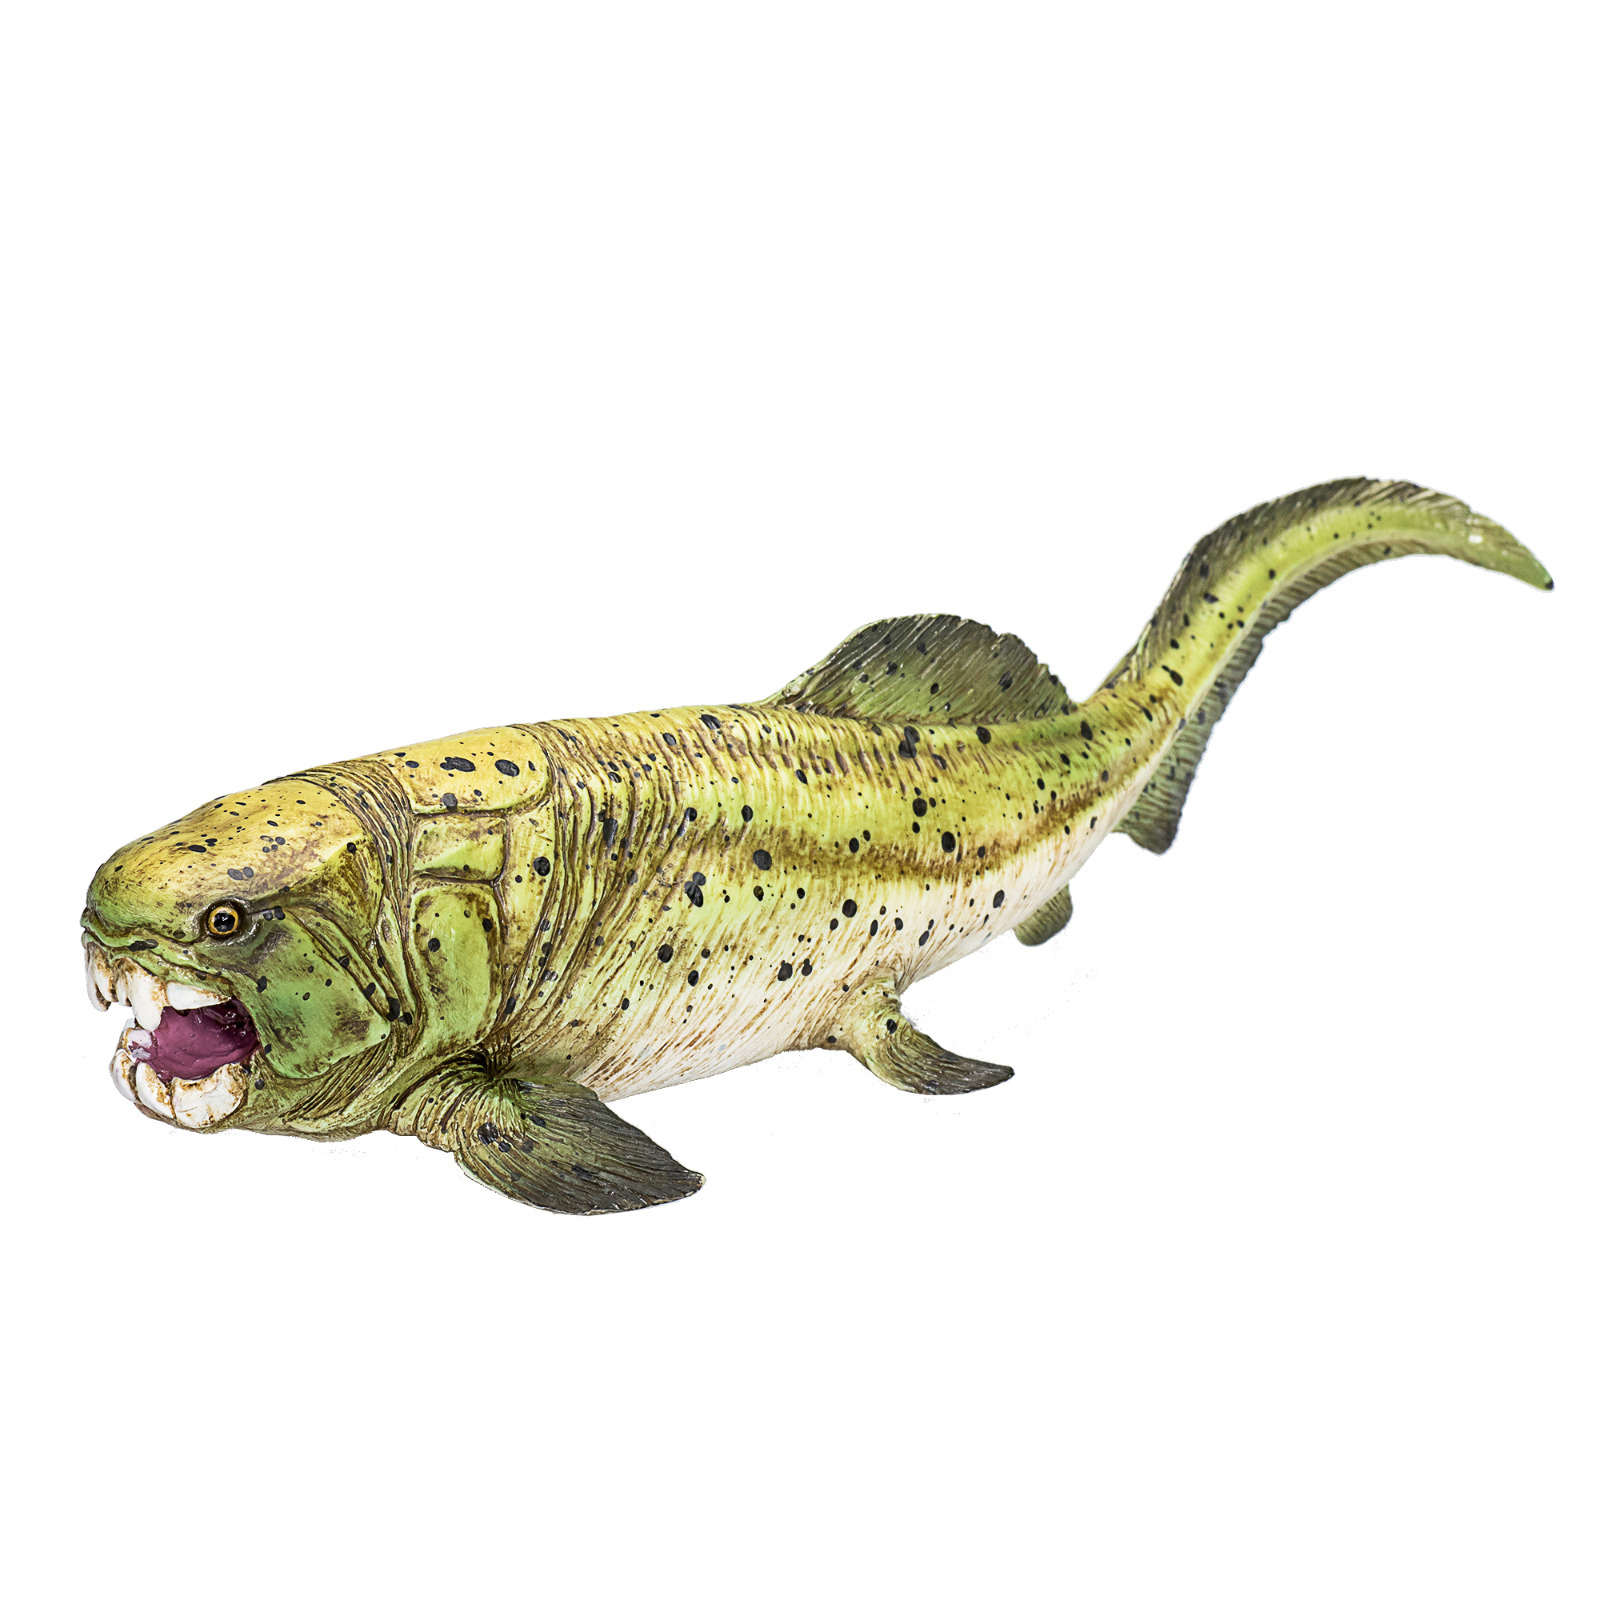 Mojo DUNKLEOSTEUS DINOSAUR model figure toy Jurassic prehistoric figurine gift